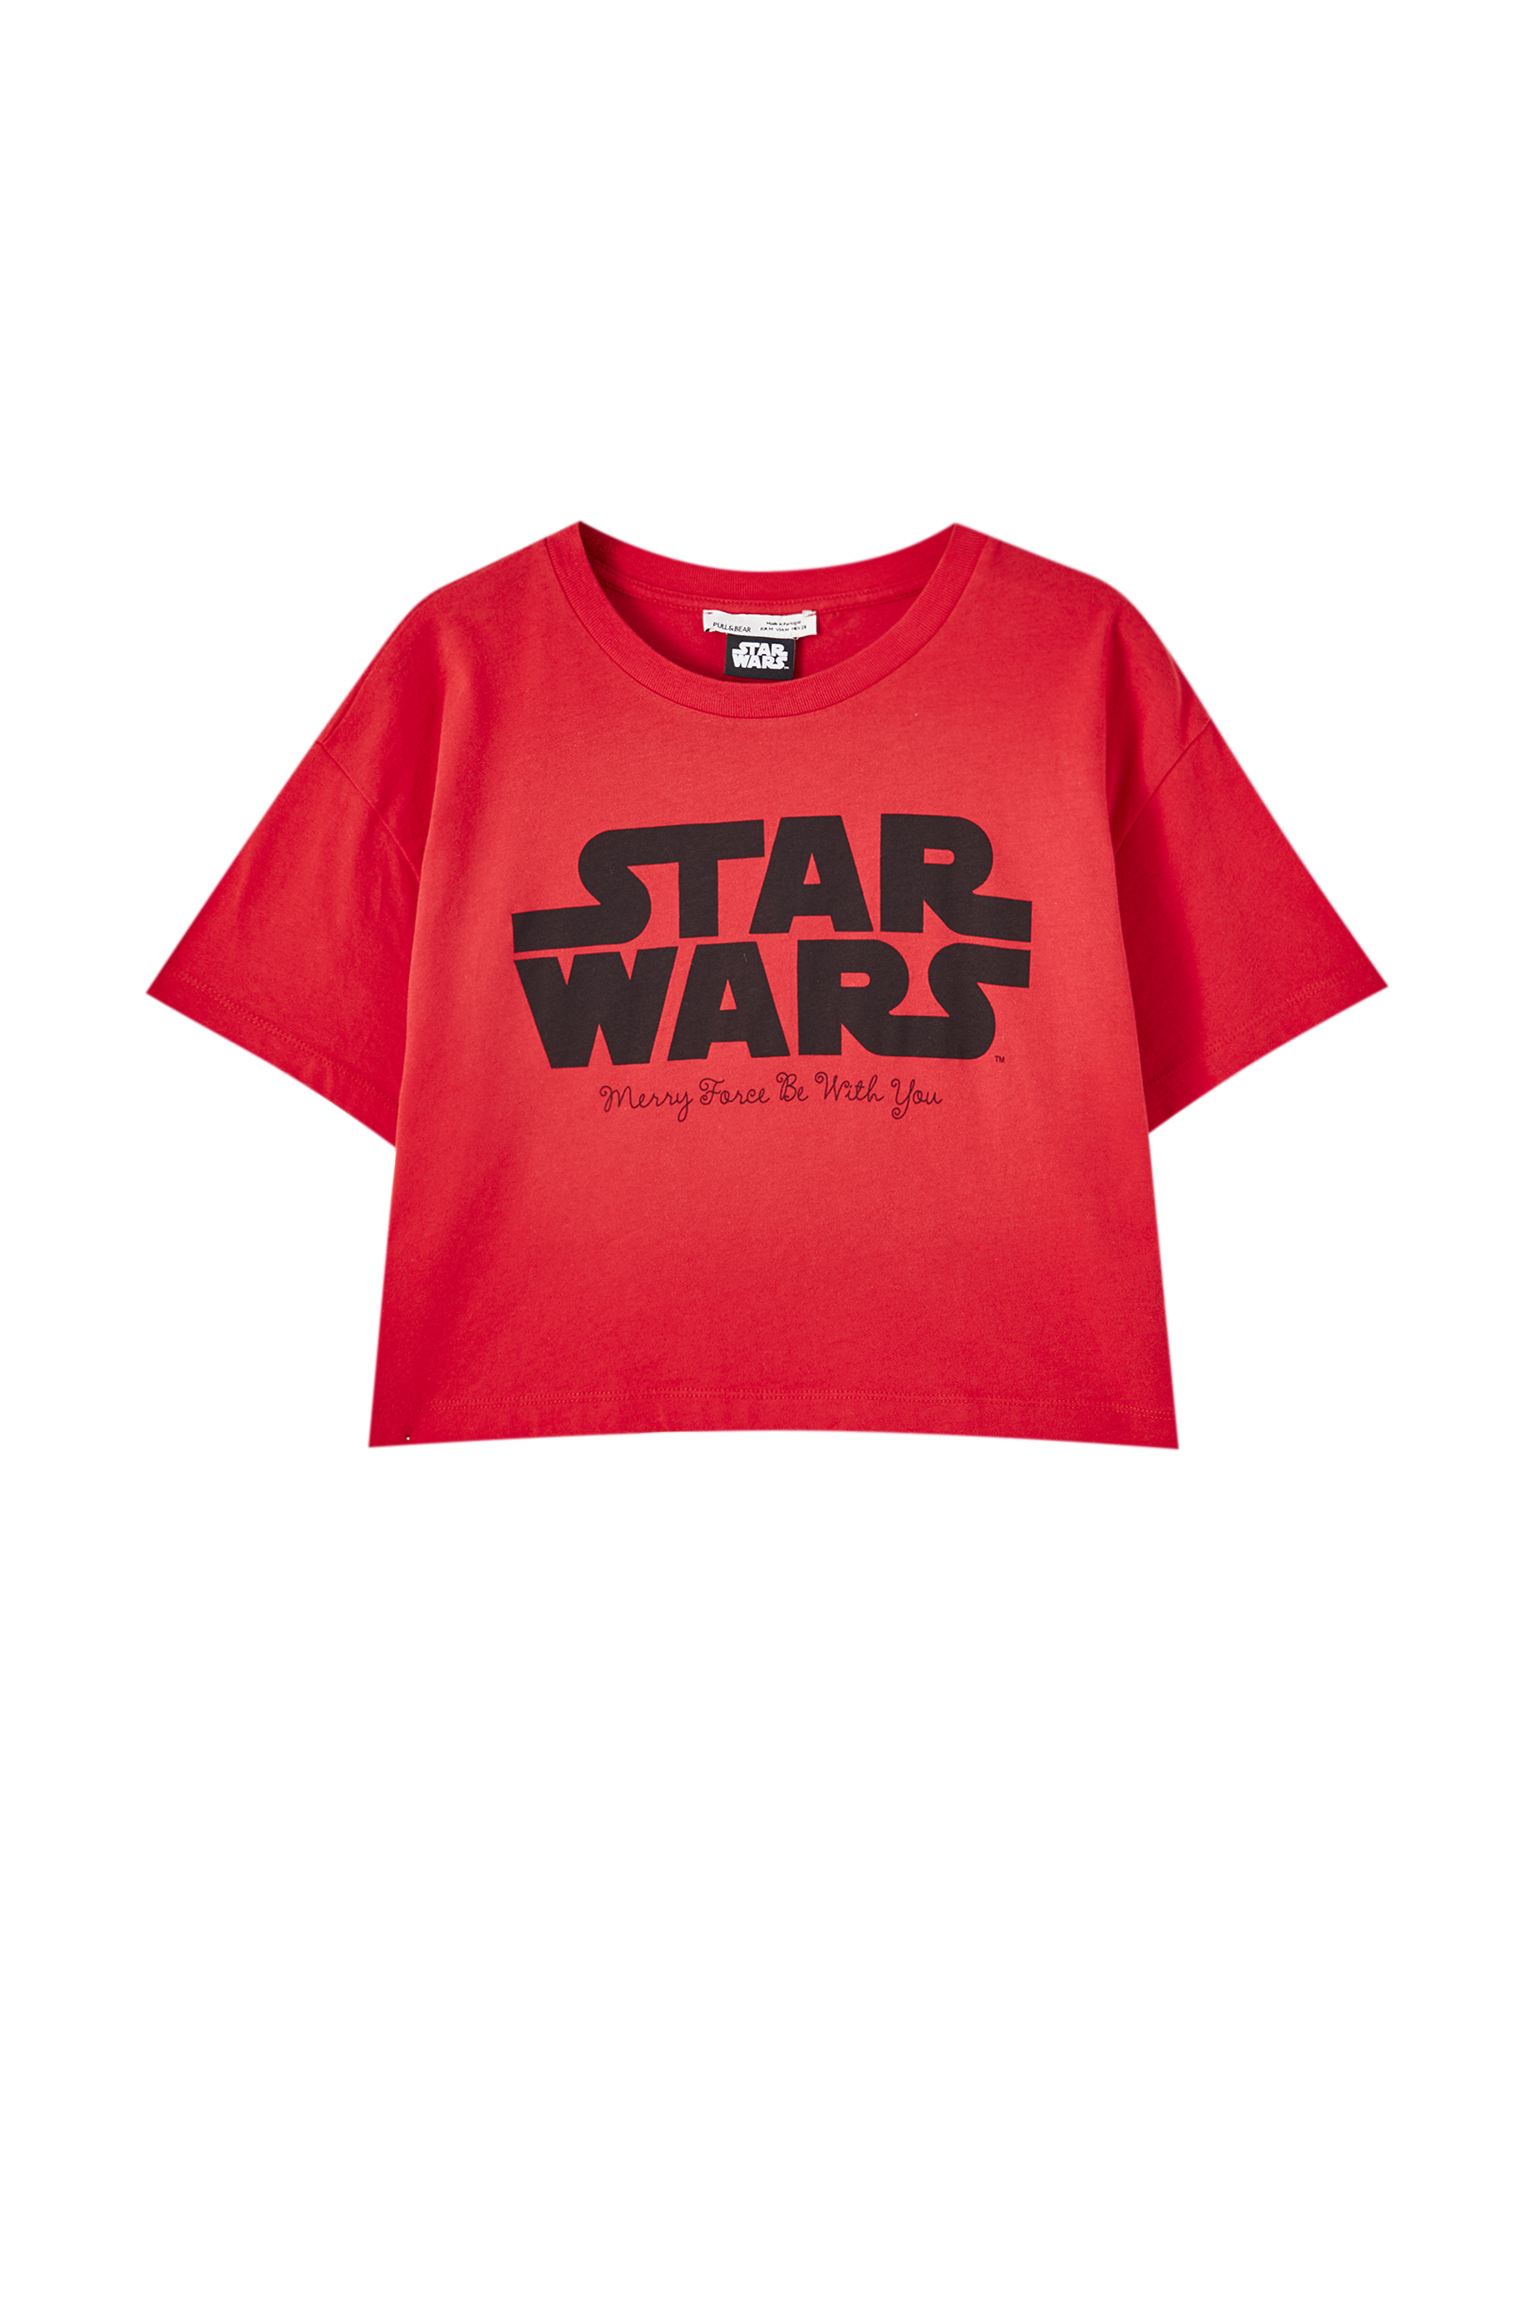 red star wars shirt